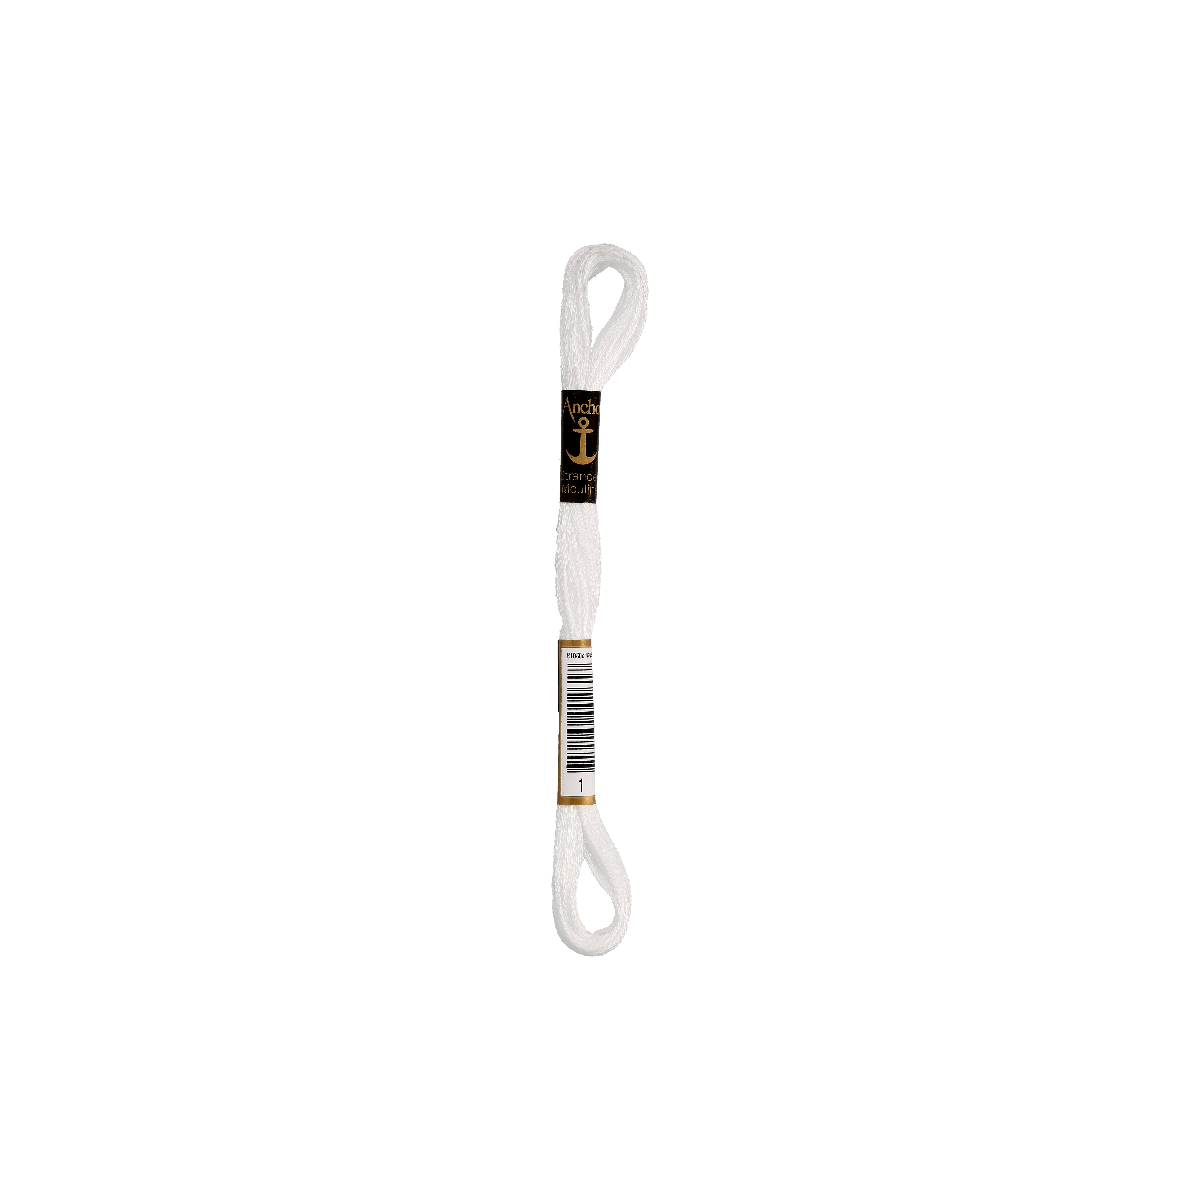 Anchor Sticktwist 8m, hoog wit, katoen, kleur 01, 6-draads